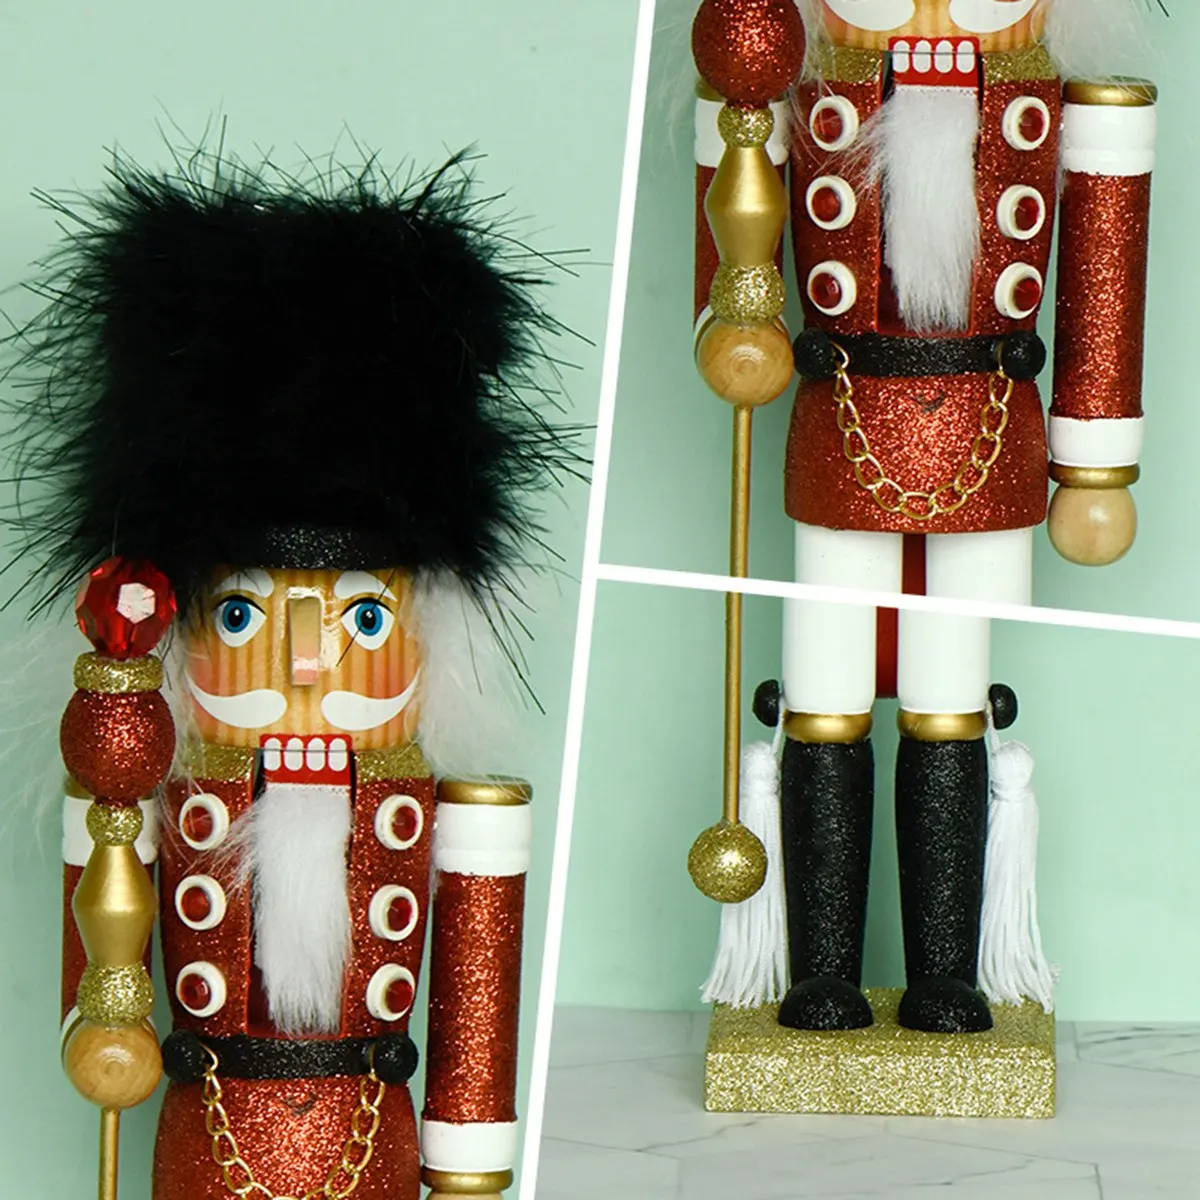 Дървени Орнаменти във формата на Крал Щелкунчика, Коледни украси, Дървени фигурки, играчки-кукли, Декори